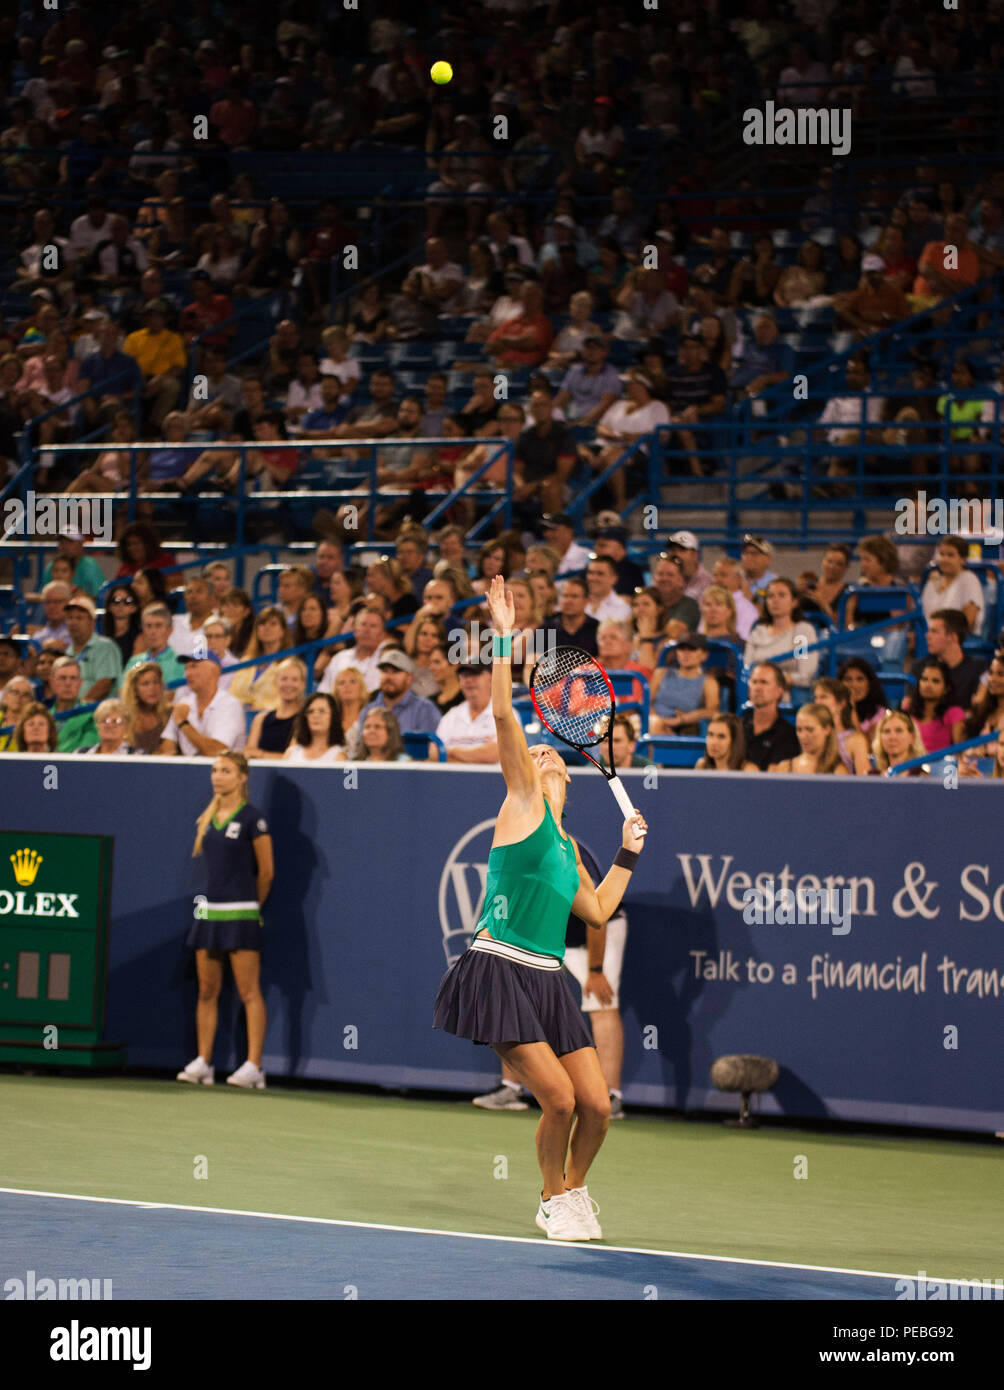 Mason, Ohio, USA. August 14, 2018:  Petra Kvitova (CZE) serves the ball back to Serena Williams (USA)  at the Western Southern Open in Mason, Ohio, USA. Brent Clark/Alamy Live News Stock Photo